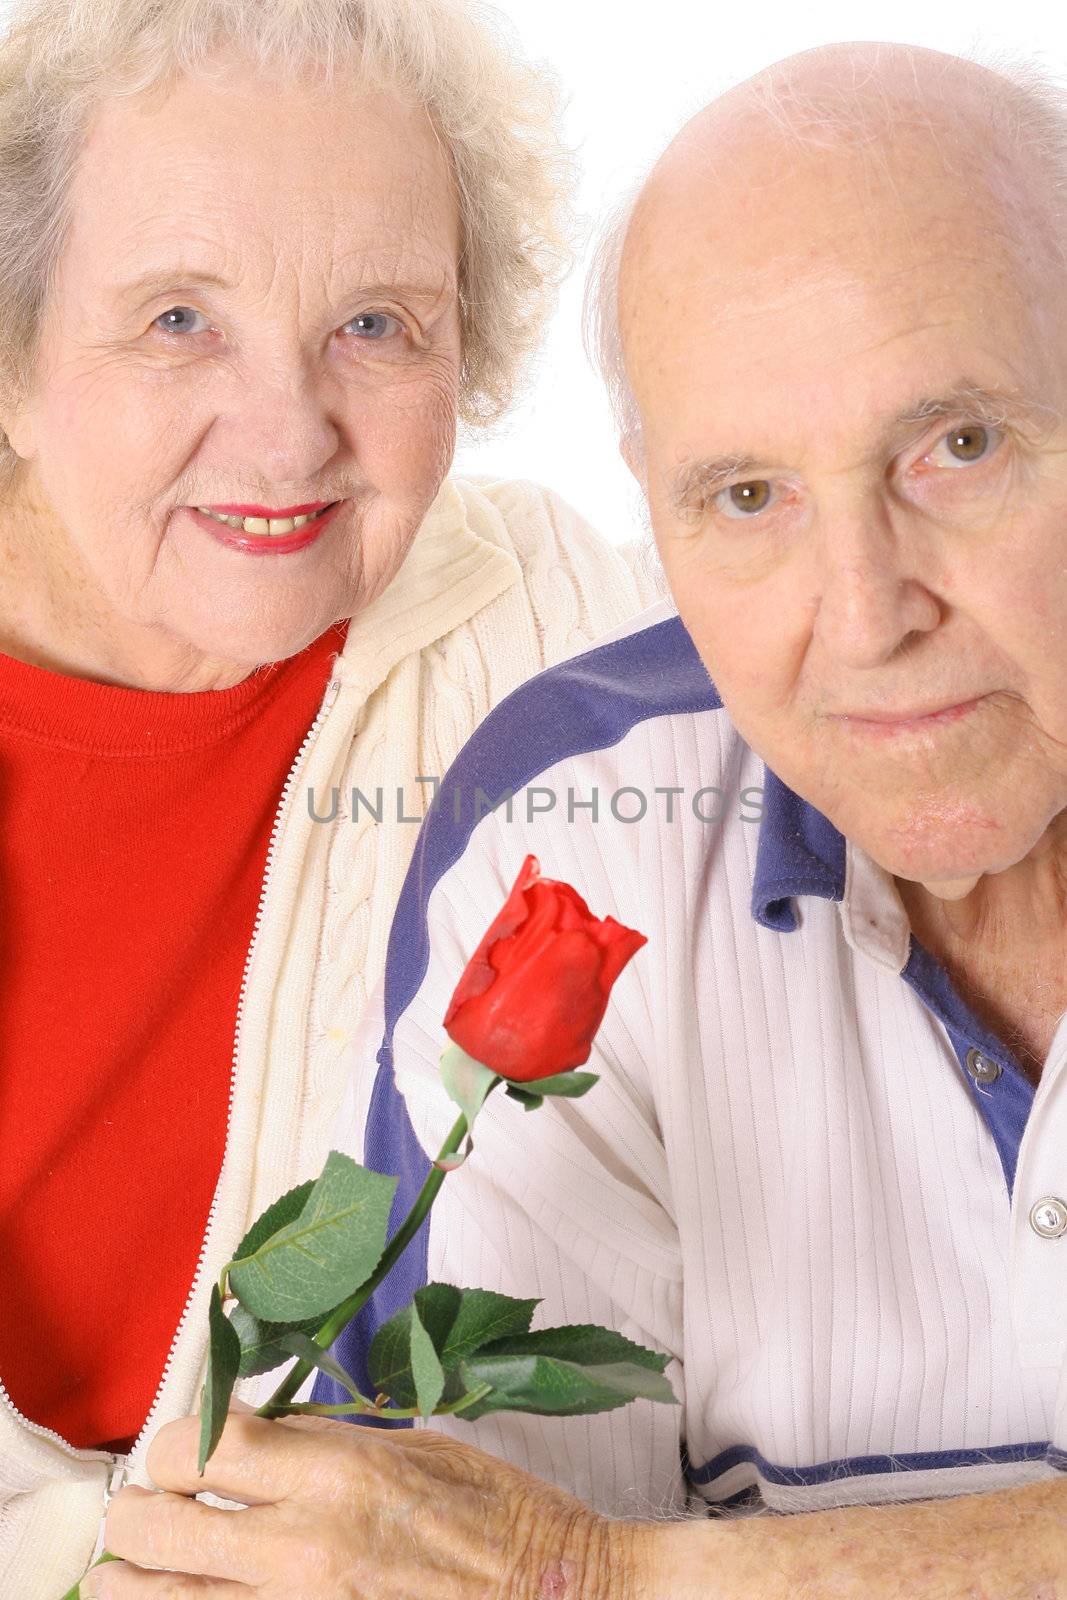 shot of a Senior valentines portrait by creativestock